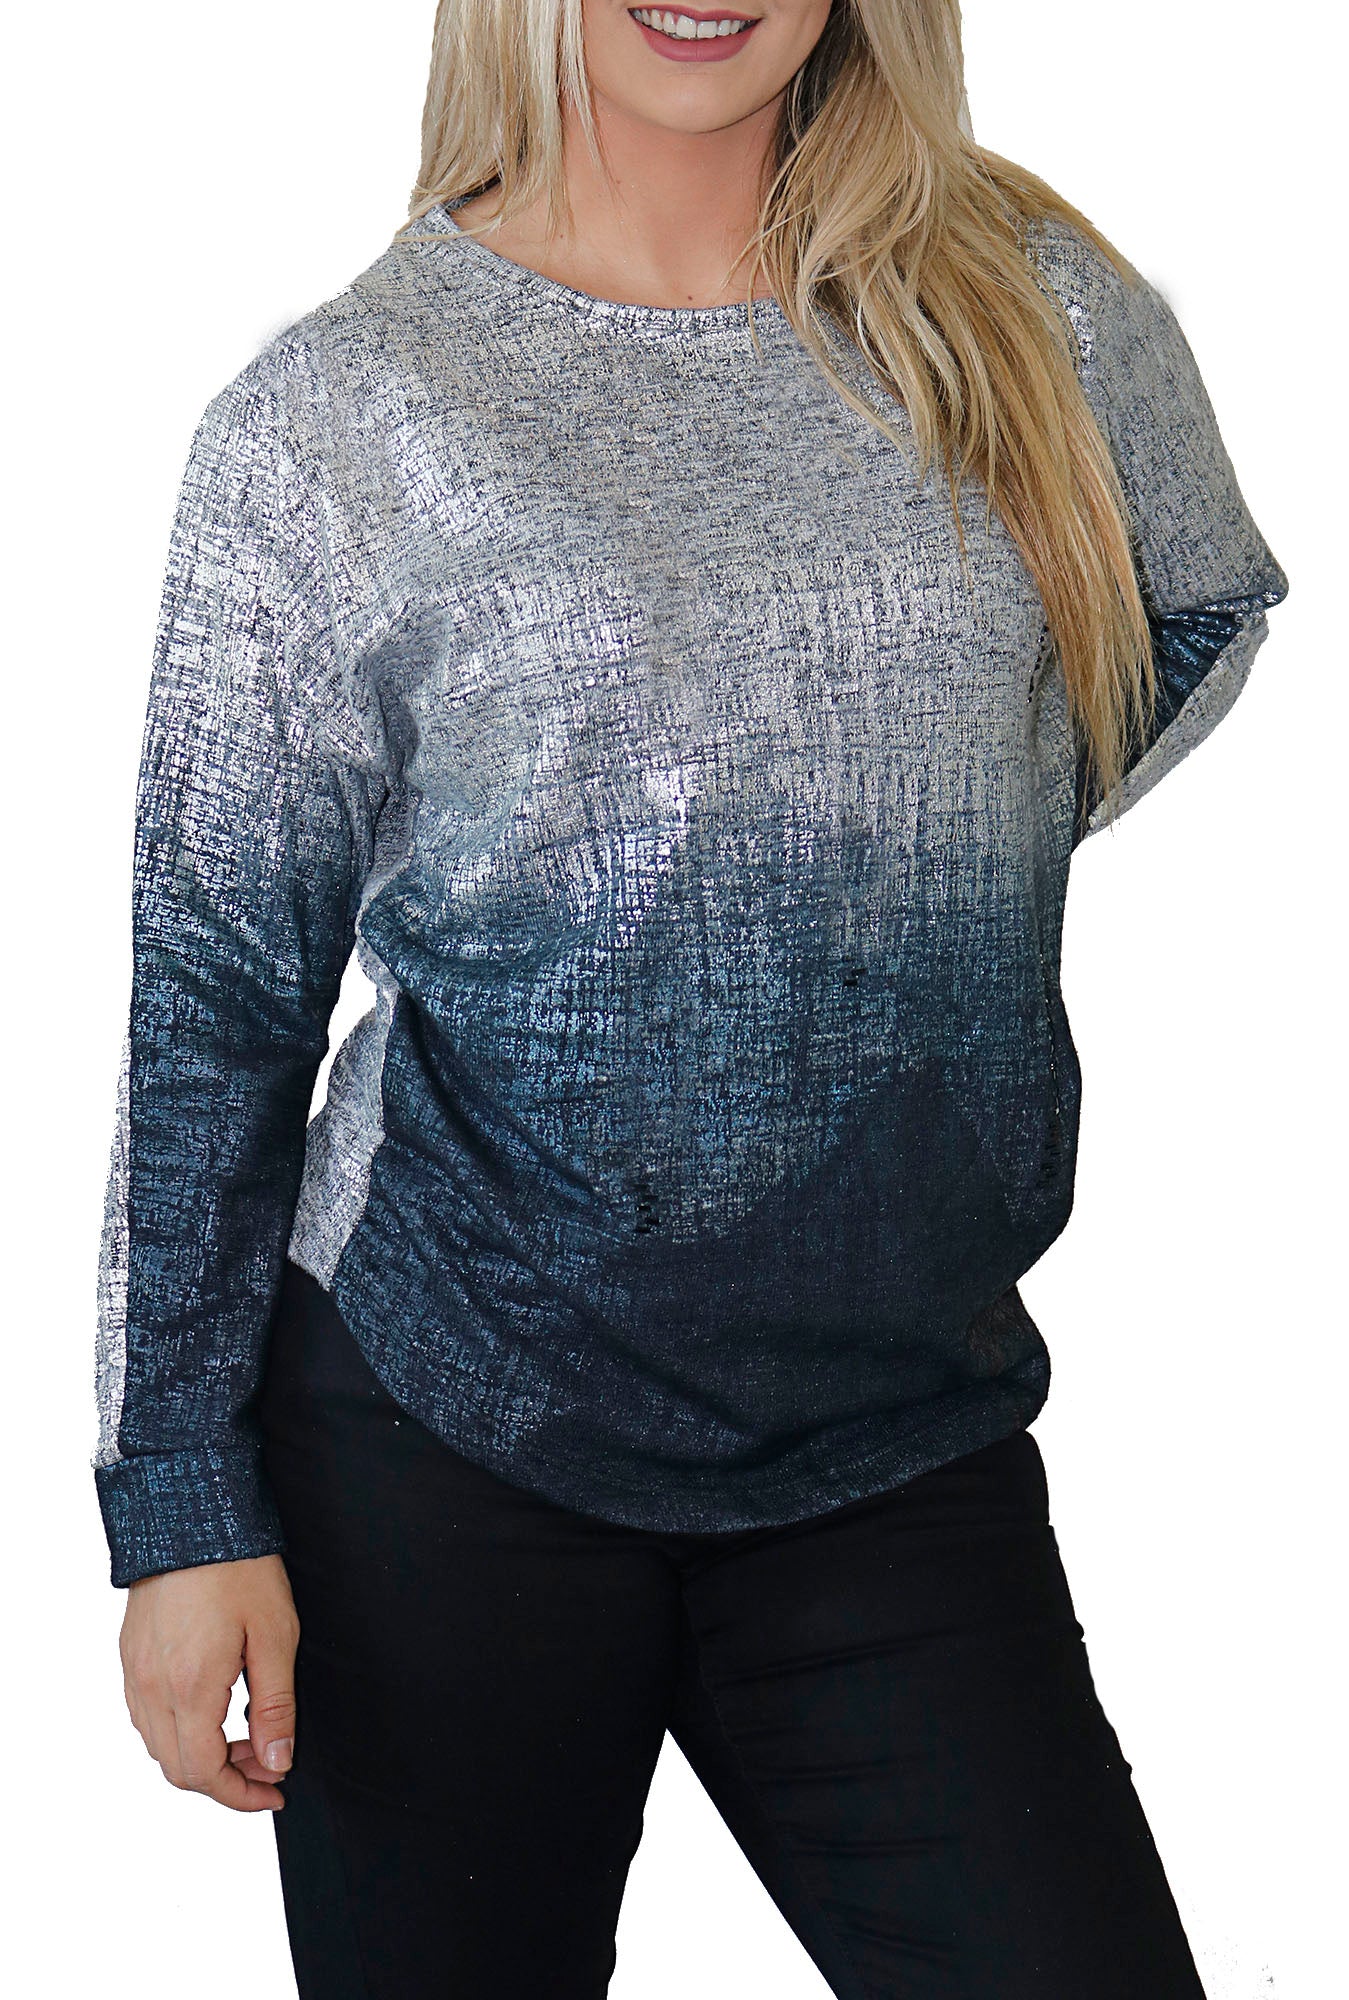 Impulse California Women's Silver Beaded Sweater